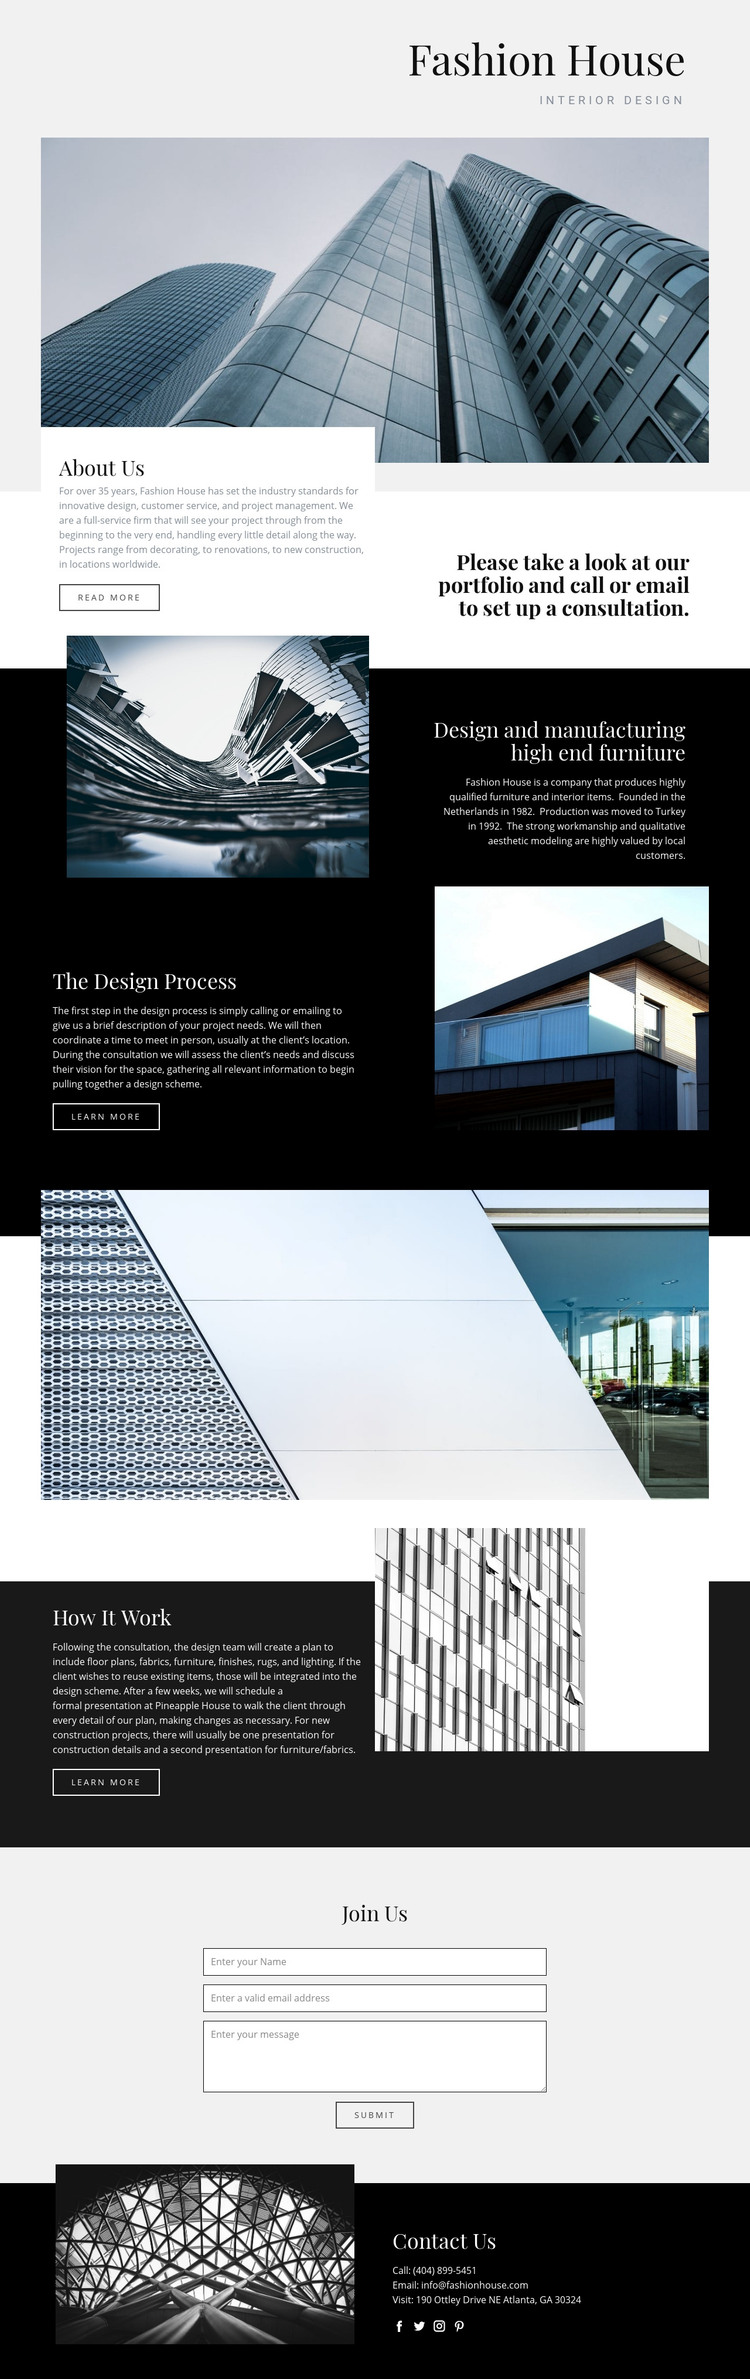 Fashion House Homepage Design